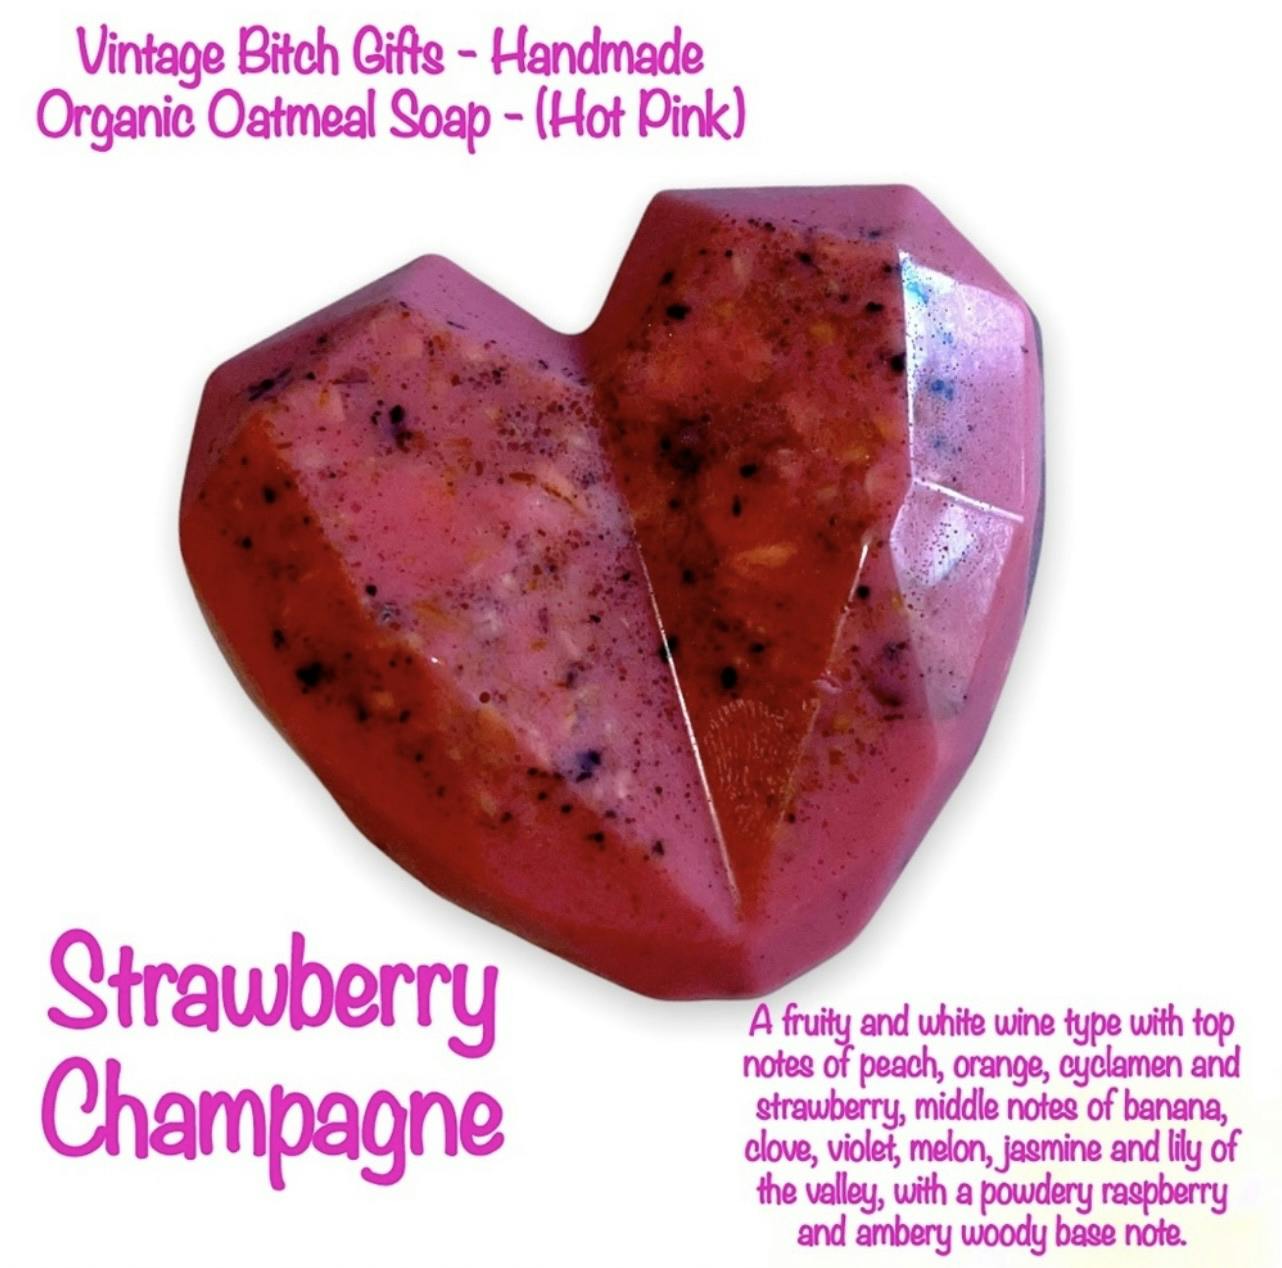 New Strawberry Champagne Organic Oatmeal Soap